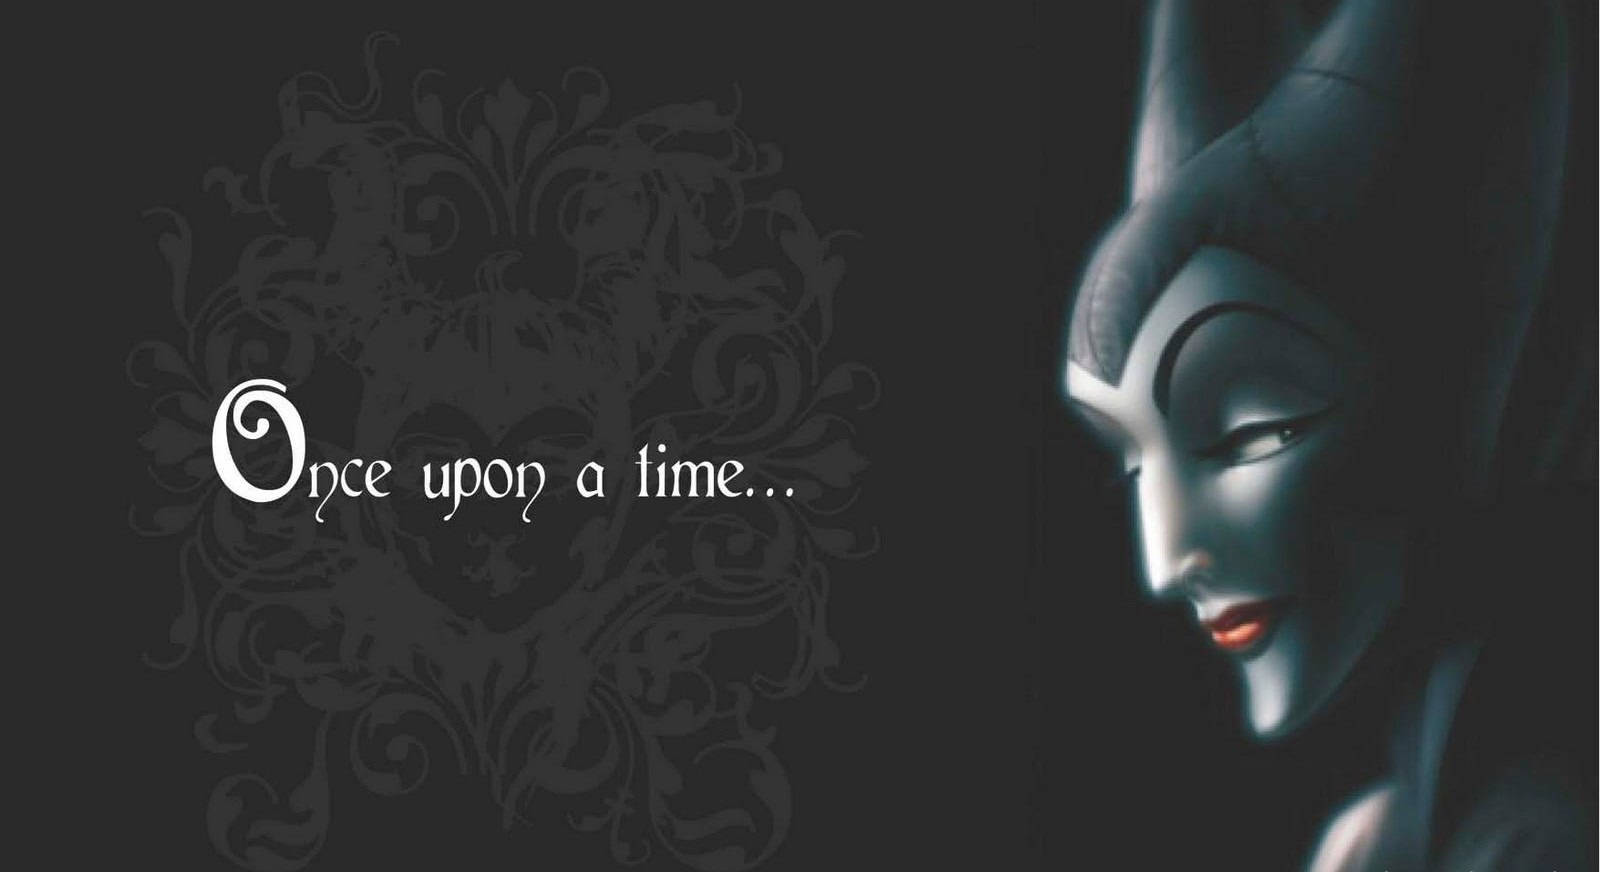 Disney Villain Maleficent Dark Aesthetic Wallpaper